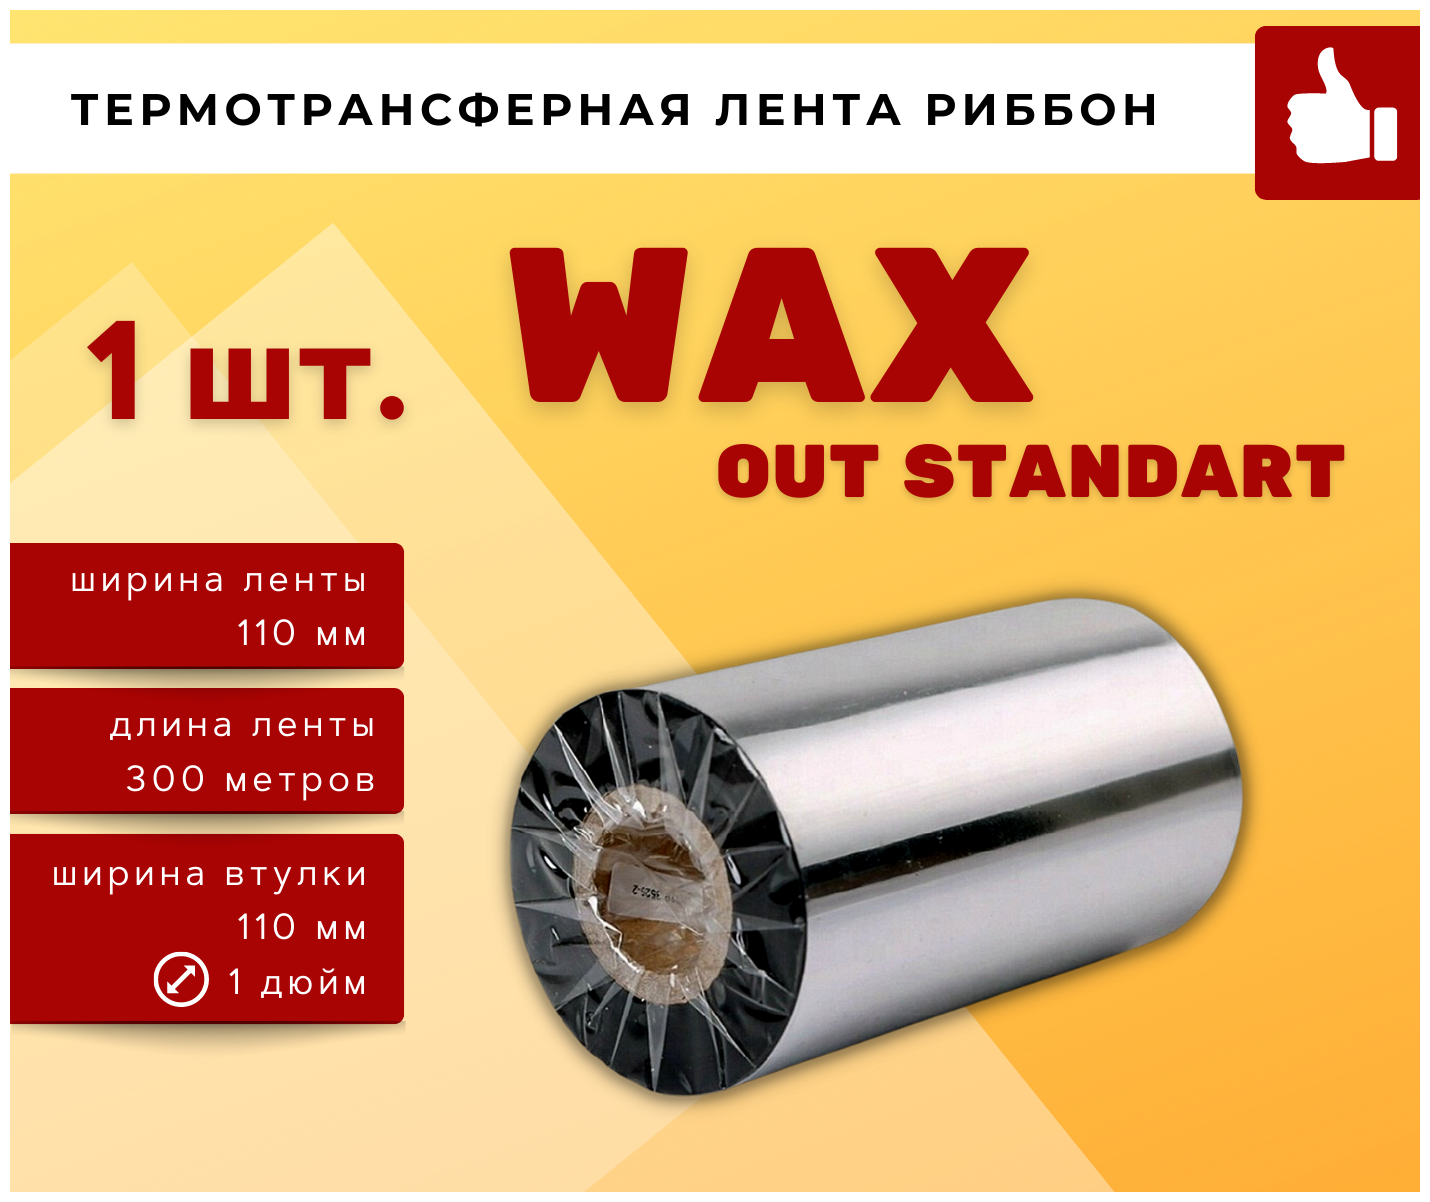 Термотрансферная красящая лента Риббон WAX OUT STANDART (Ролик) 110ммх300м (Втулка 110мм, 1дюйм), 1 шт.